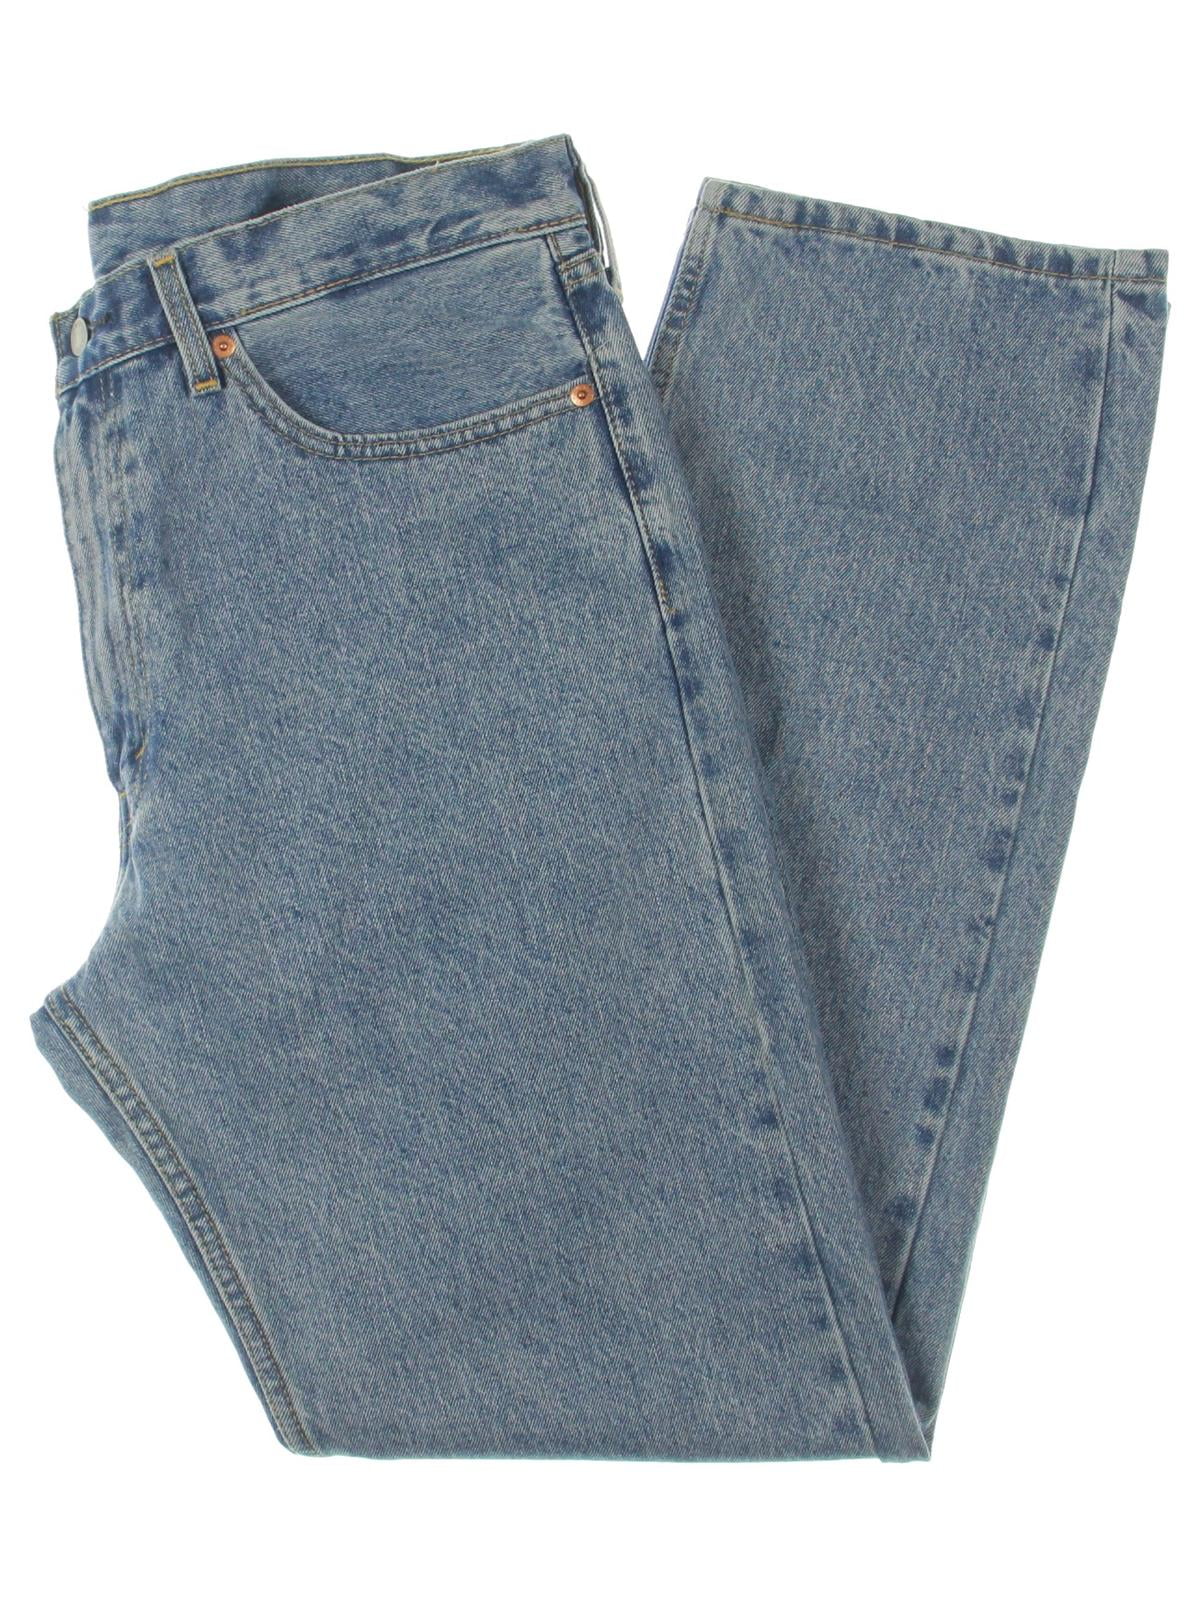 Levi's 505 Men's Regular Fit Jean - Light Wash, Light Wash, 29X32 -  Walmart.com